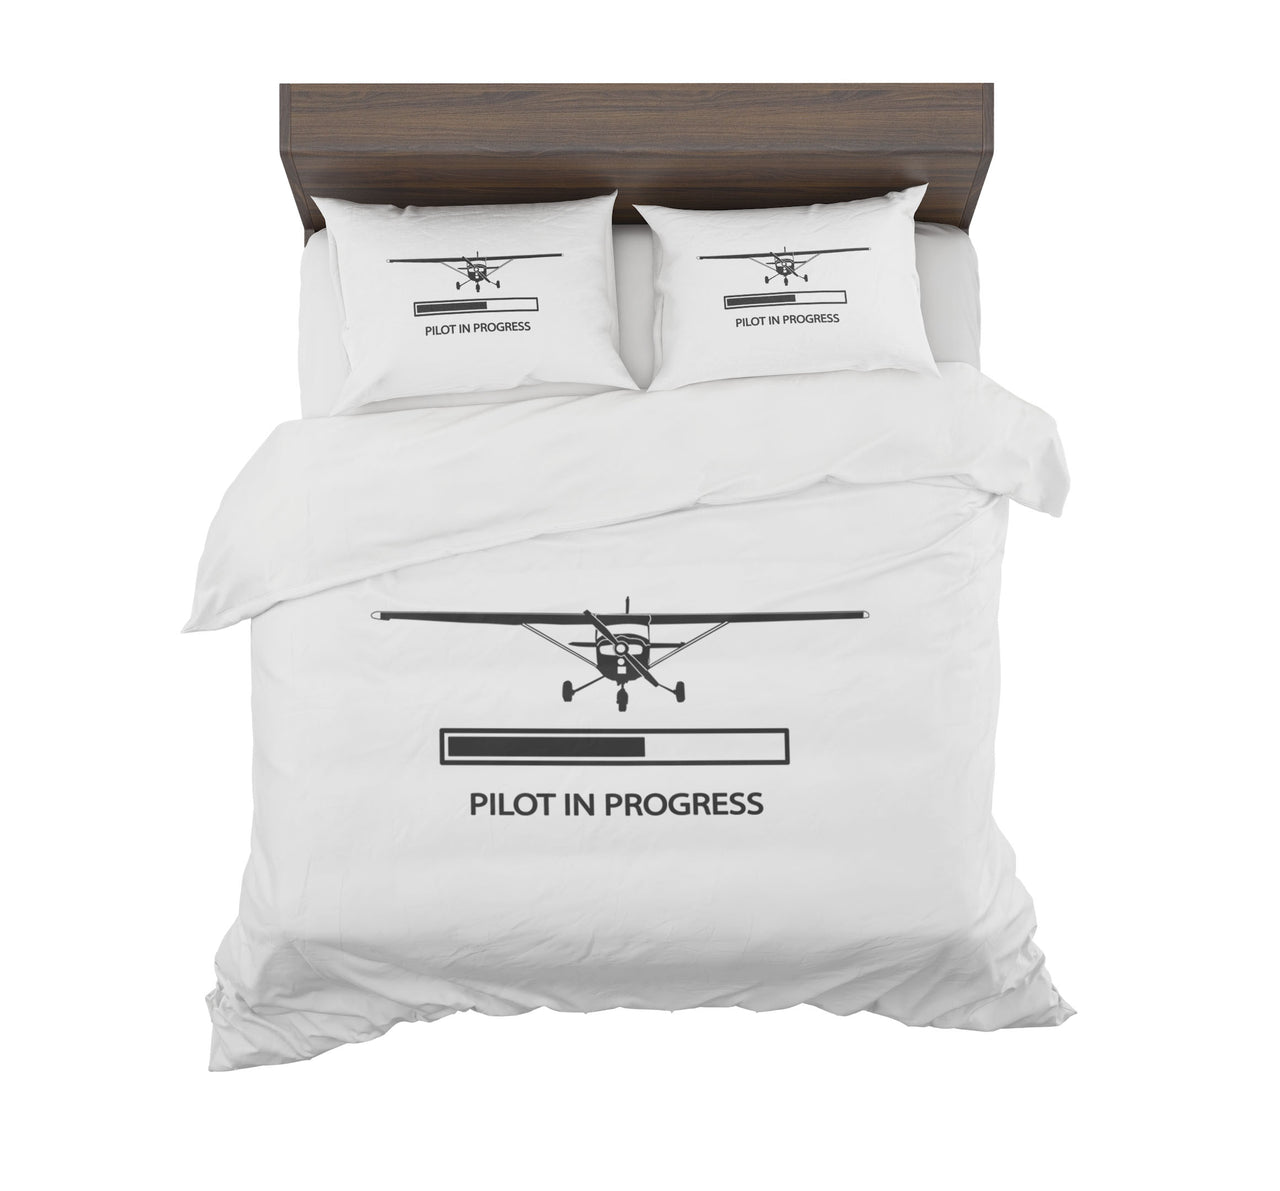 Pilot In Progress (Cessna) Designed Bedding Sets